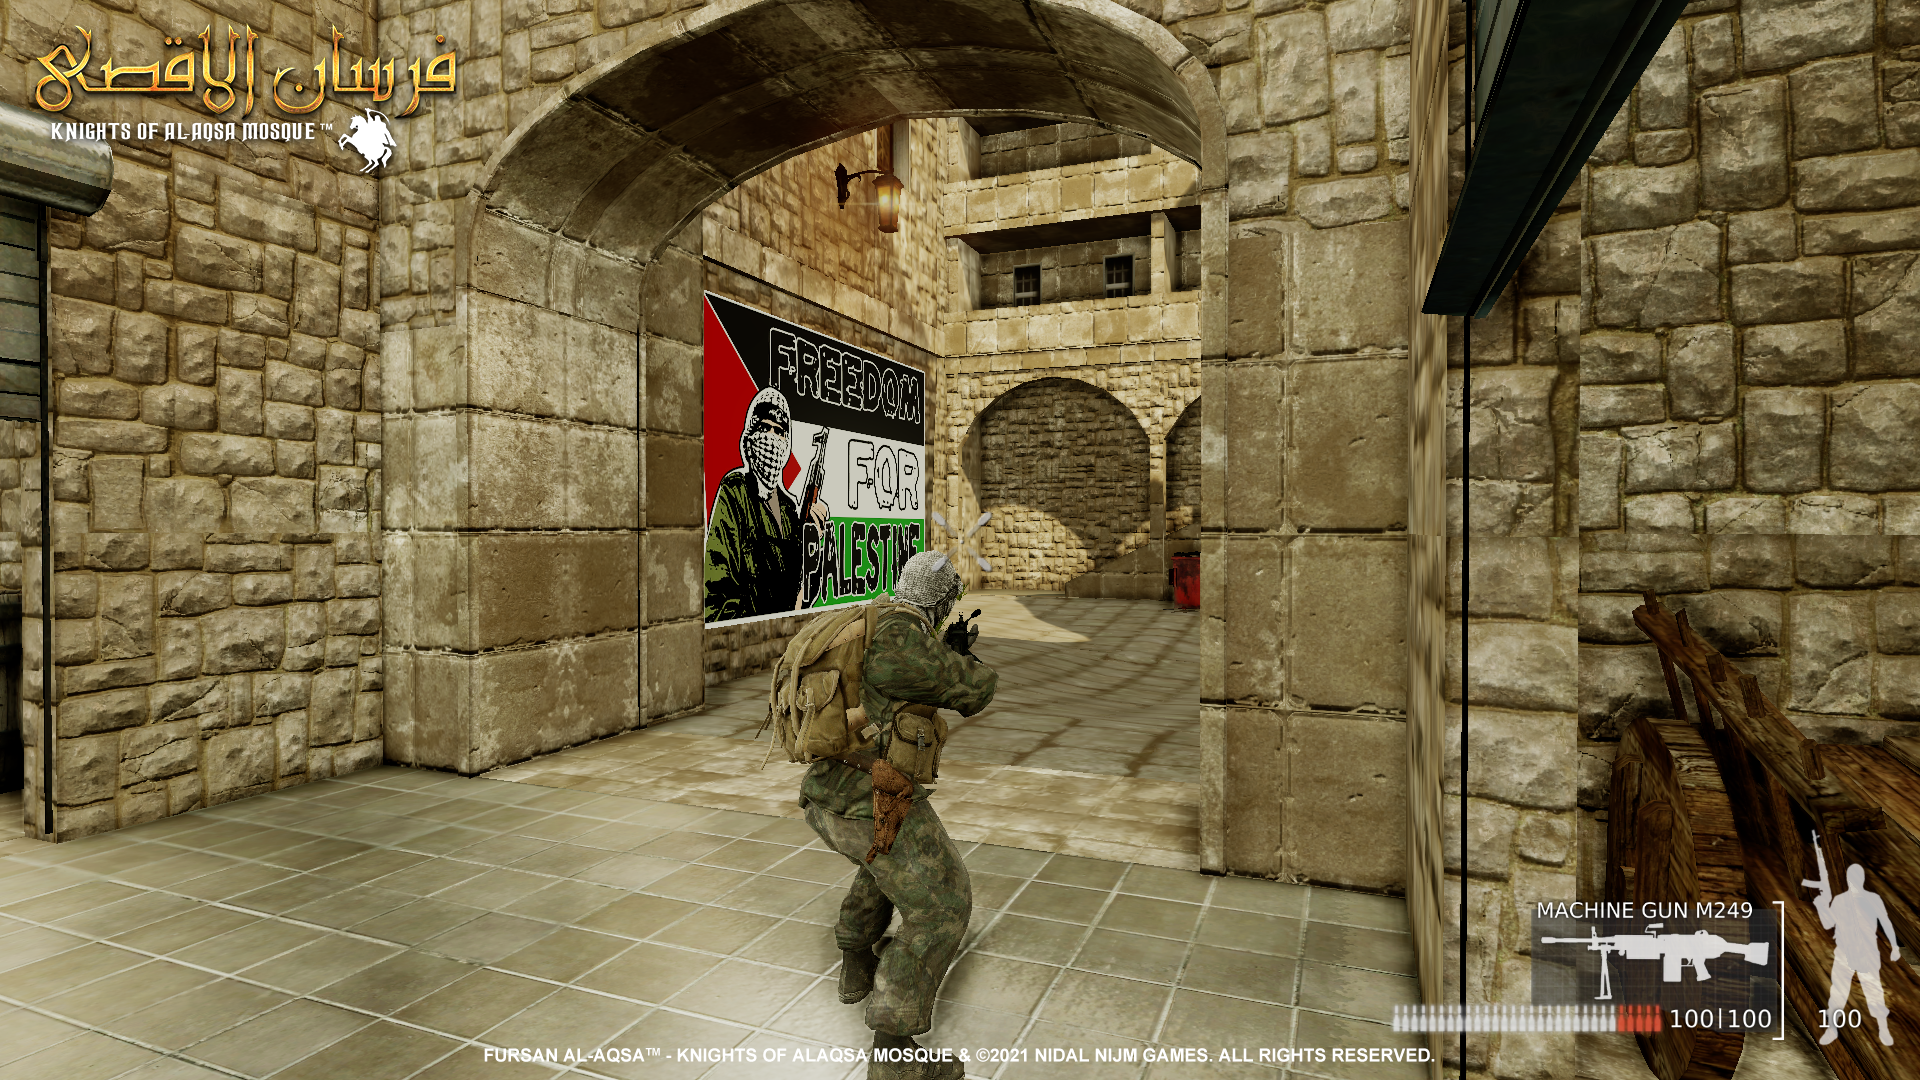 Fursan alAqsa  Showcase Jerusalem 10 1 - I am developing a game about Palestine Resistance